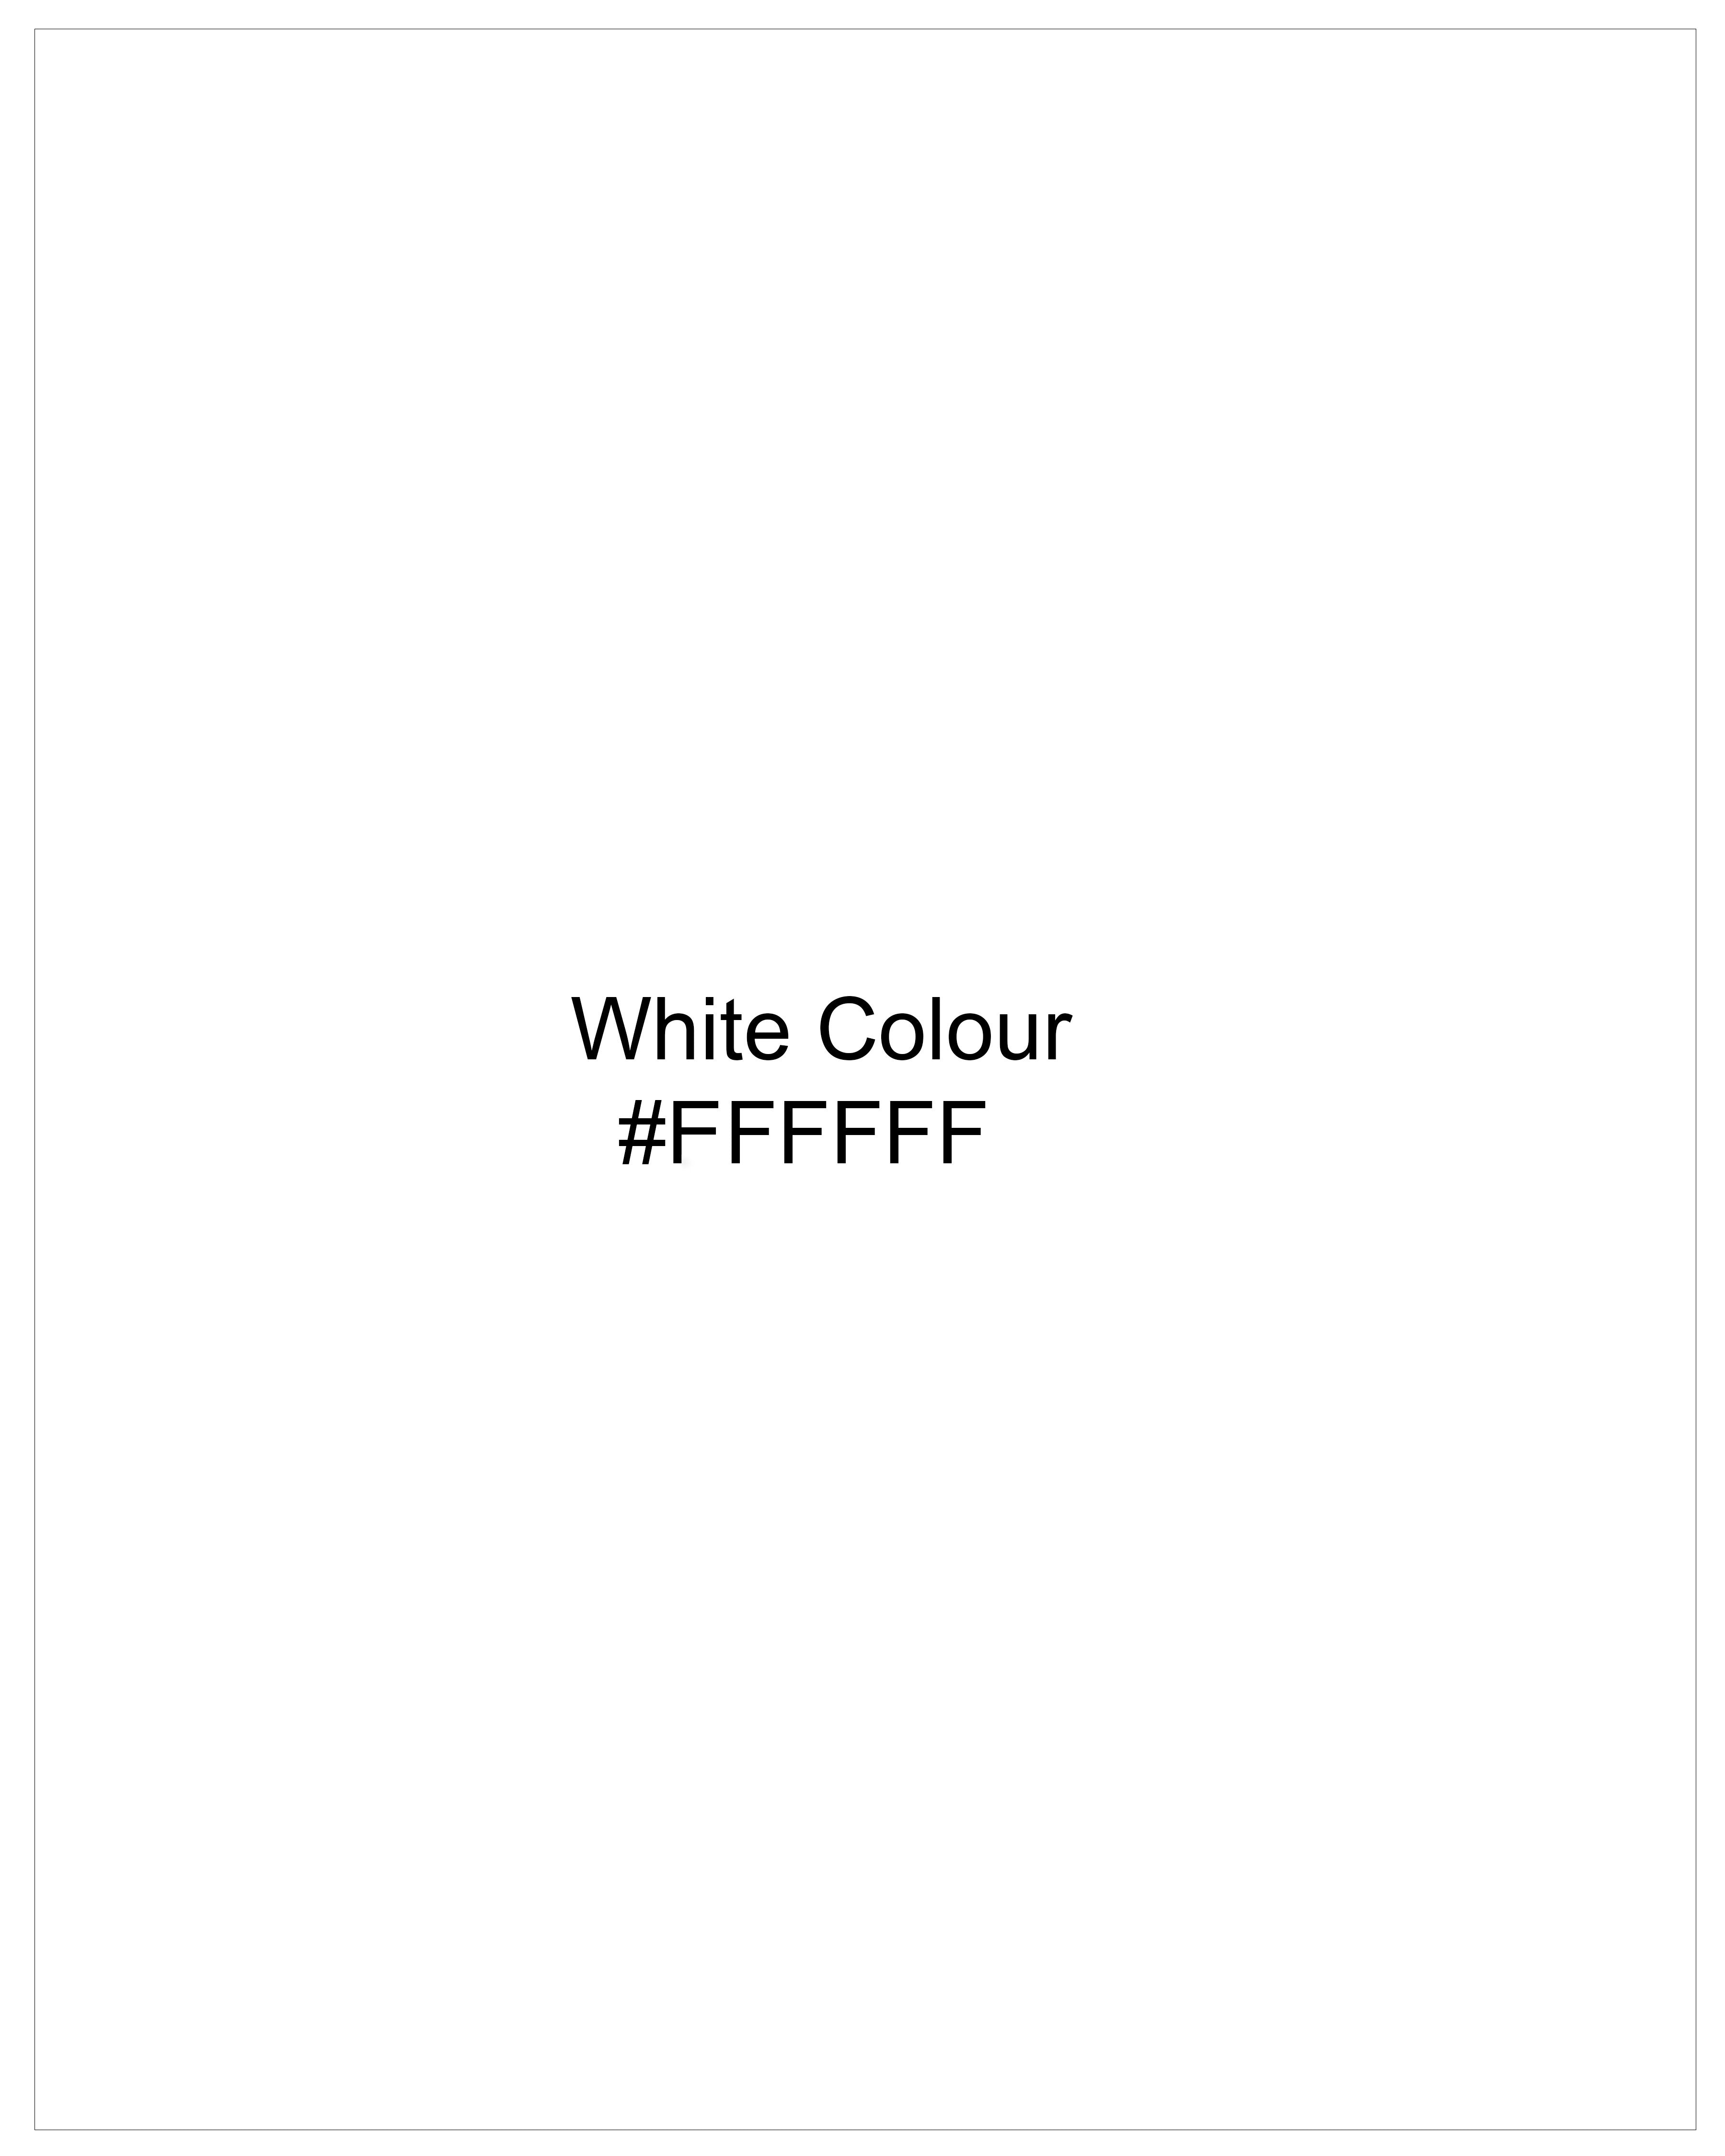 Bright White Subtle Sheen with Black Cricketer Embroidered Work Super Soft Premium cotton Shirt 1062-BLK-E052-38,1062-BLK-E052-H-38,1062-BLK-E052-39,1062-BLK-E052-H-39,1062-BLK-E052-40,1062-BLK-E052-H-40,1062-BLK-E052-42,1062-BLK-E052-H-42,1062-BLK-E052-44,1062-BLK-E052-H-44,1062-BLK-E052-46,1062-BLK-E052-H-46,1062-BLK-E052-48,1062-BLK-E052-H-48,1062-BLK-E052-50,1062-BLK-E052-H-50,1062-BLK-E052-52,1062-BLK-E052-H-52